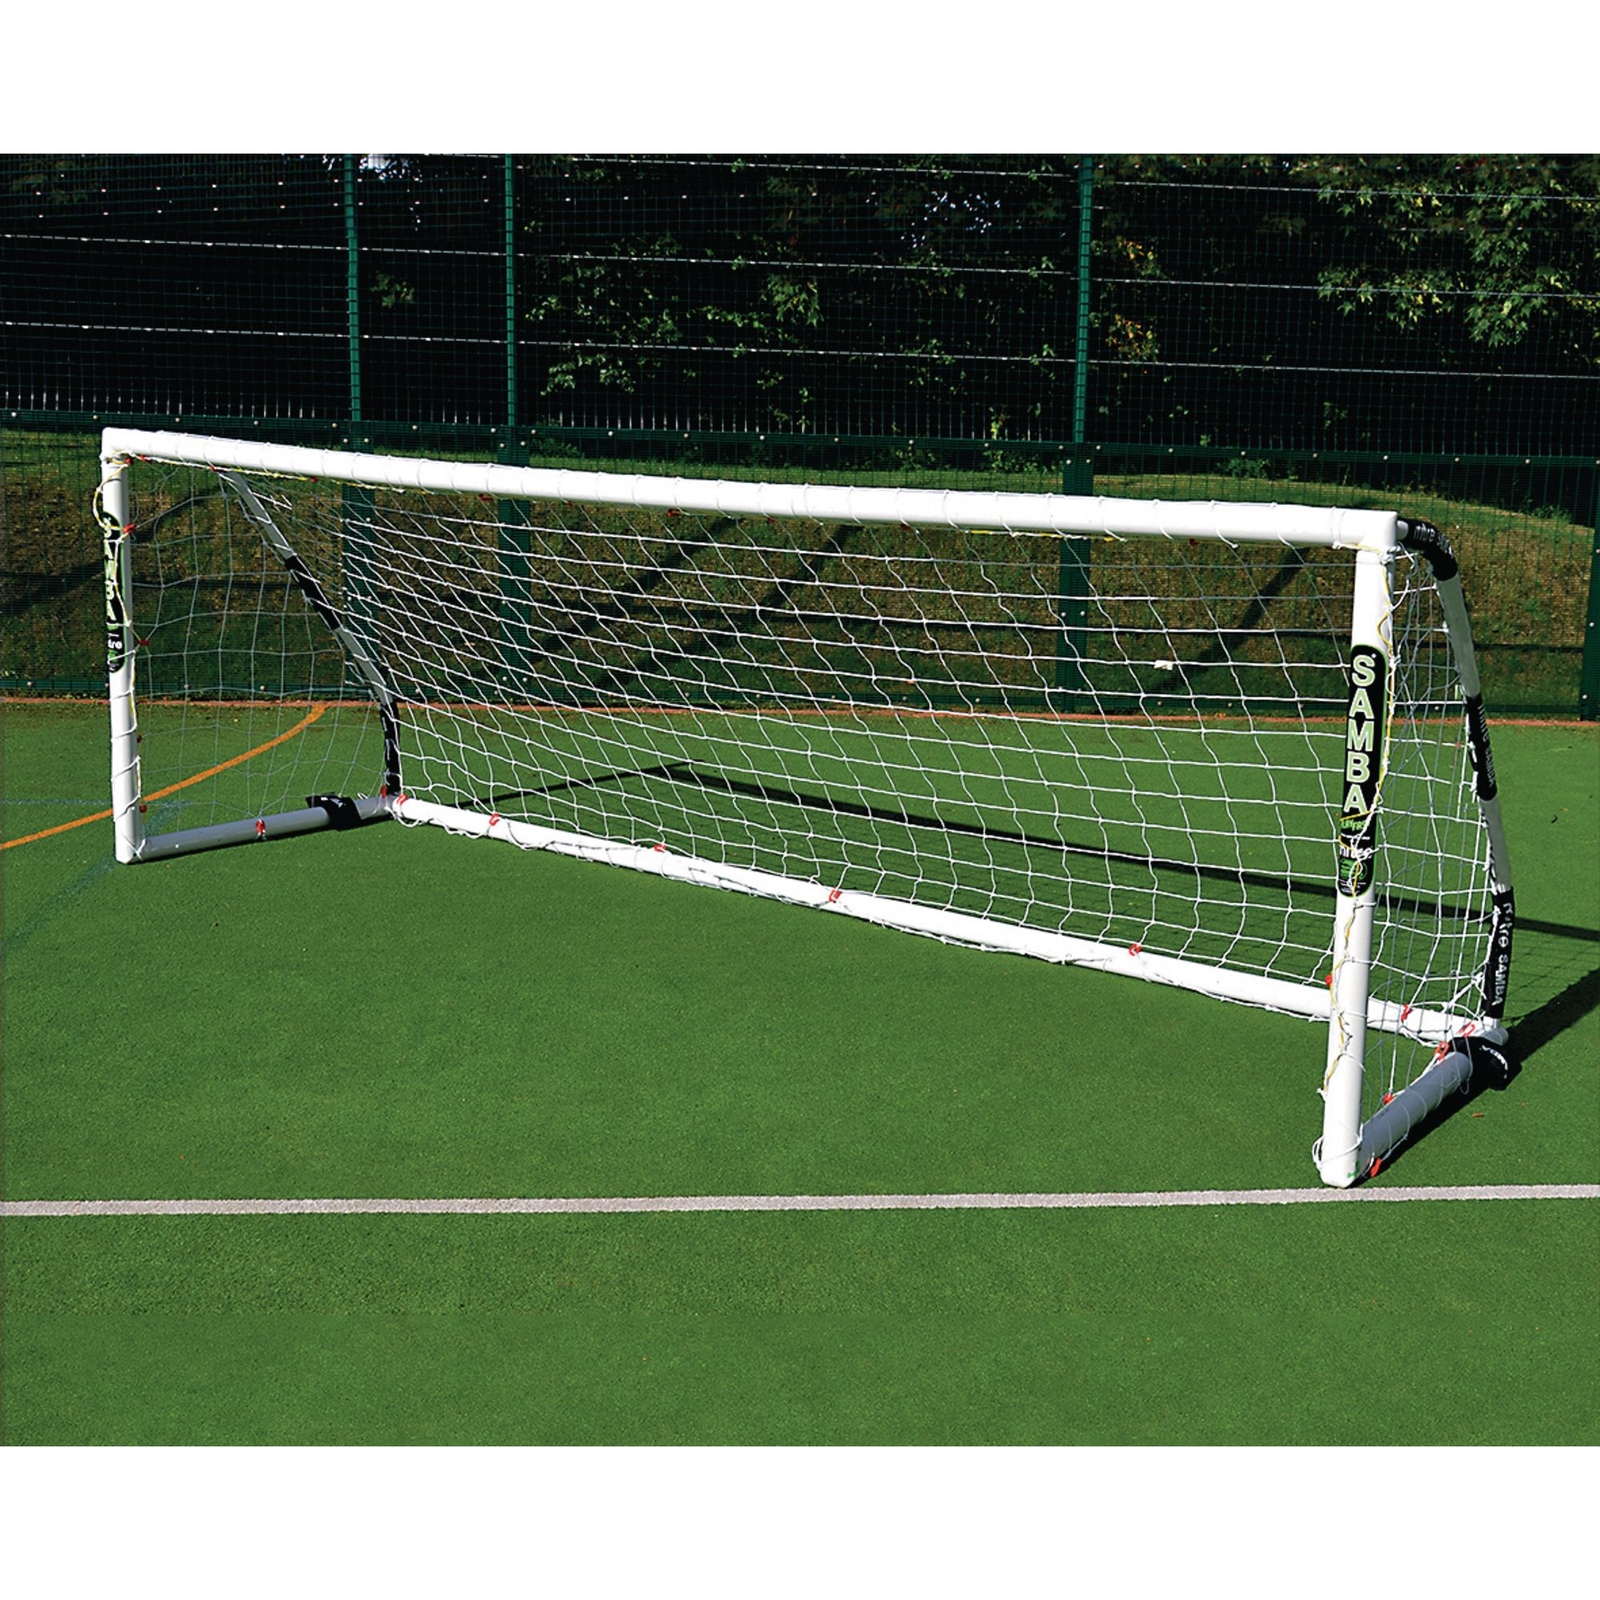 Samba Mitre PlayFast Match Goal - 12ft x 4ft